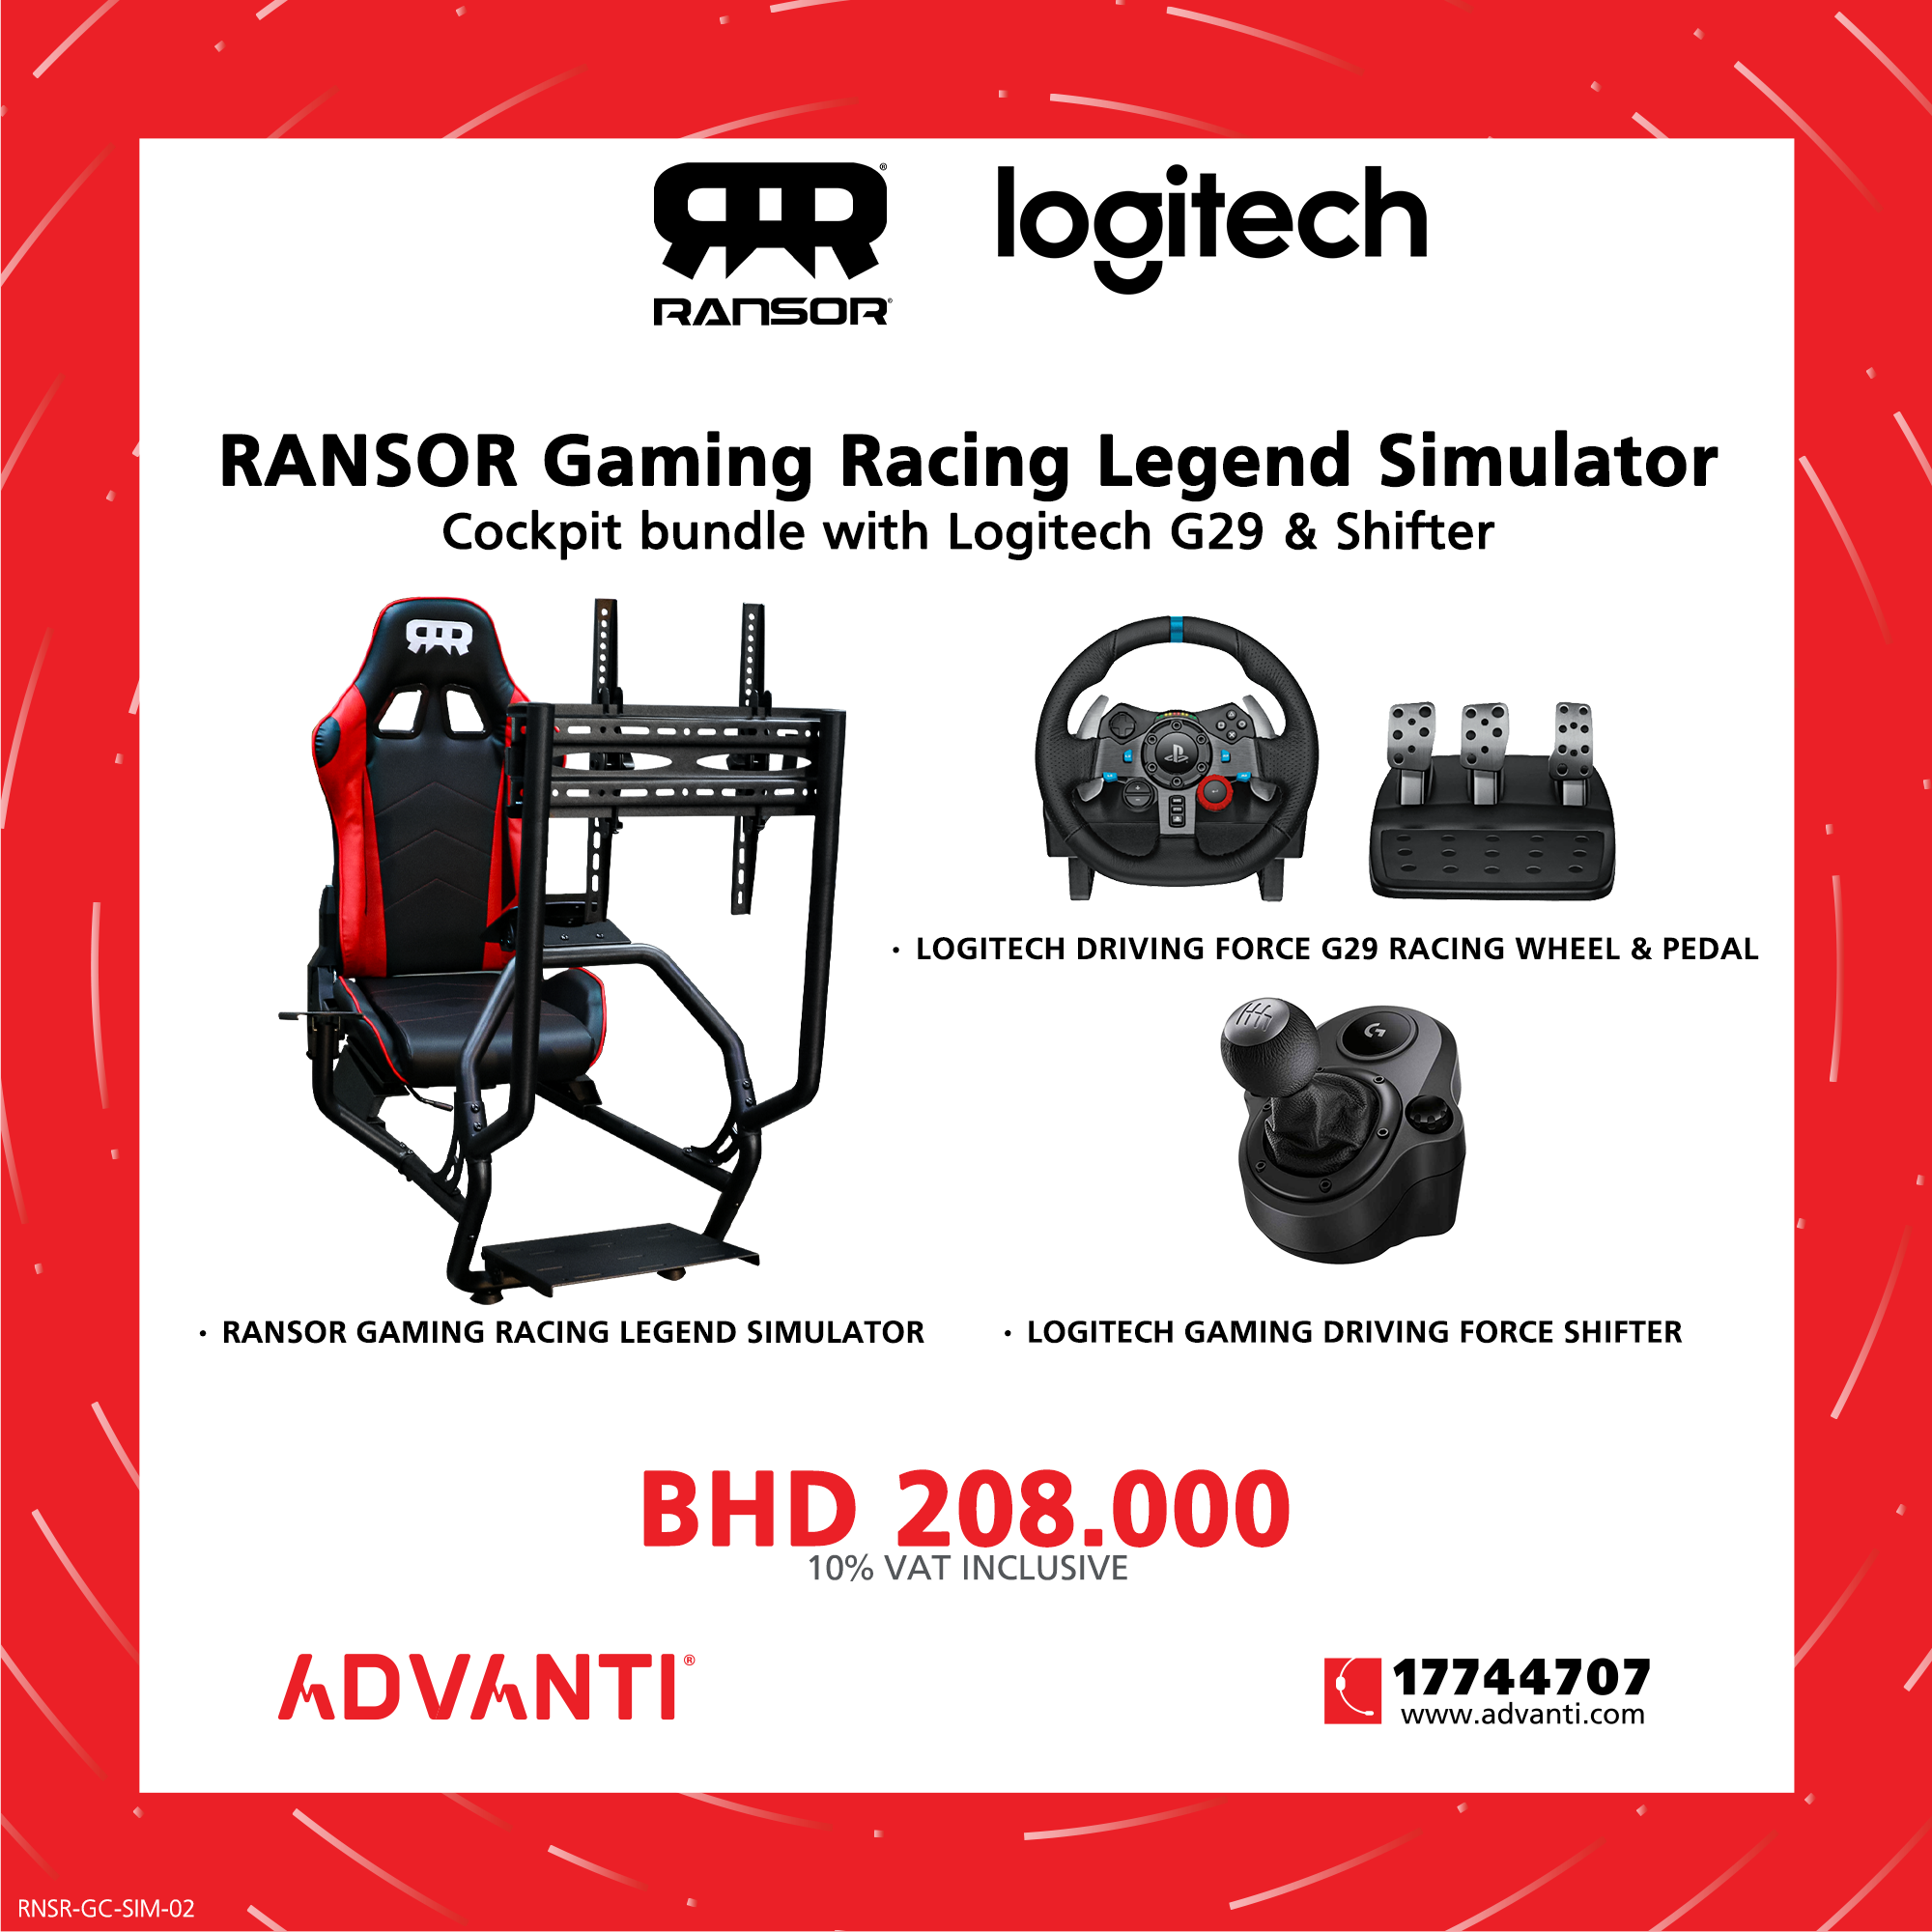 ransor-gaming-legend-simulator-cockpit-b